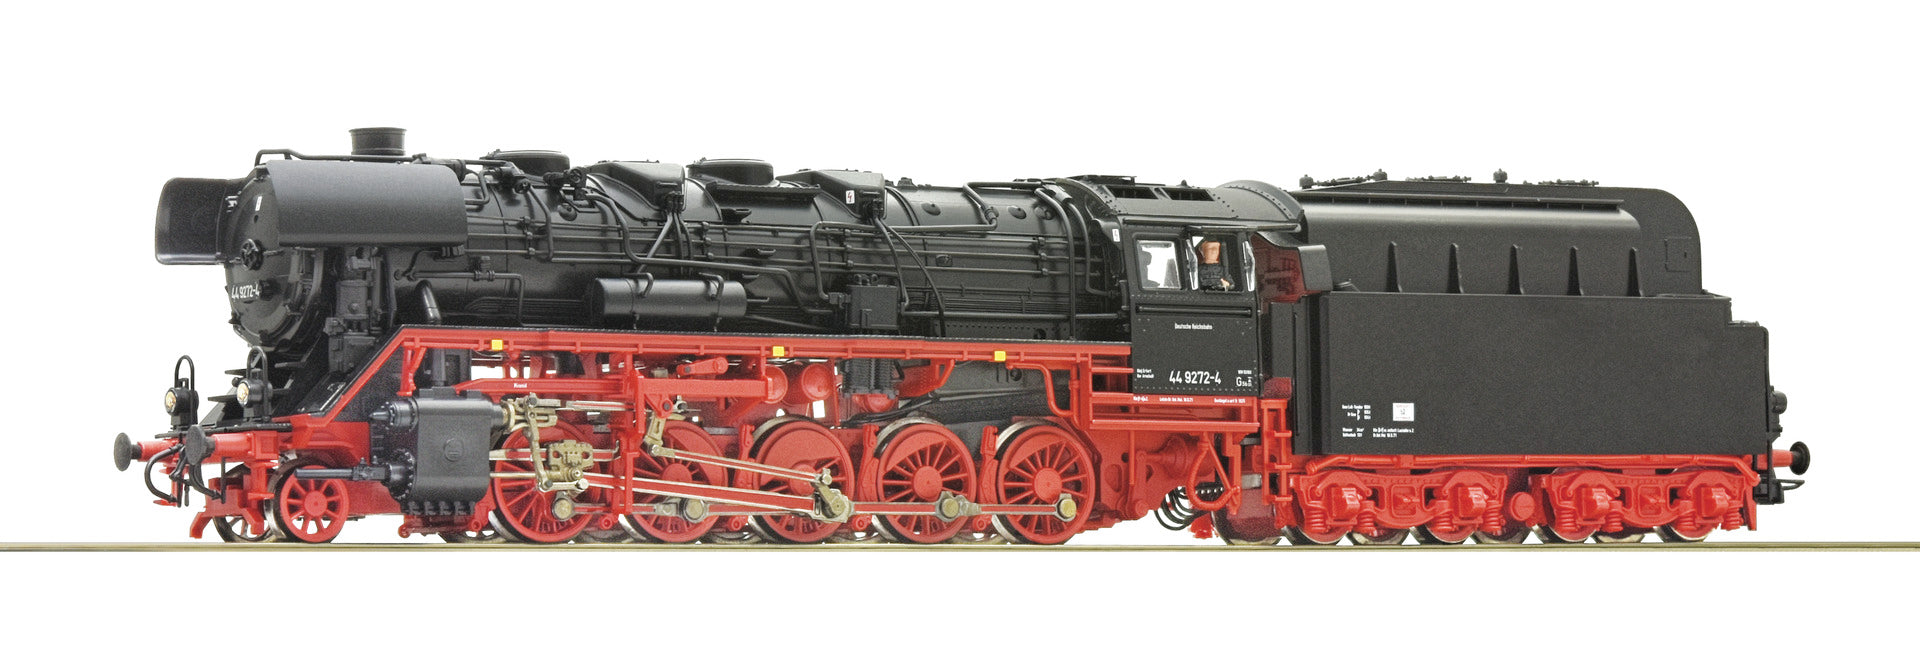 Roco 70283 H0 Steam locomotive class 44, DR, With Sound